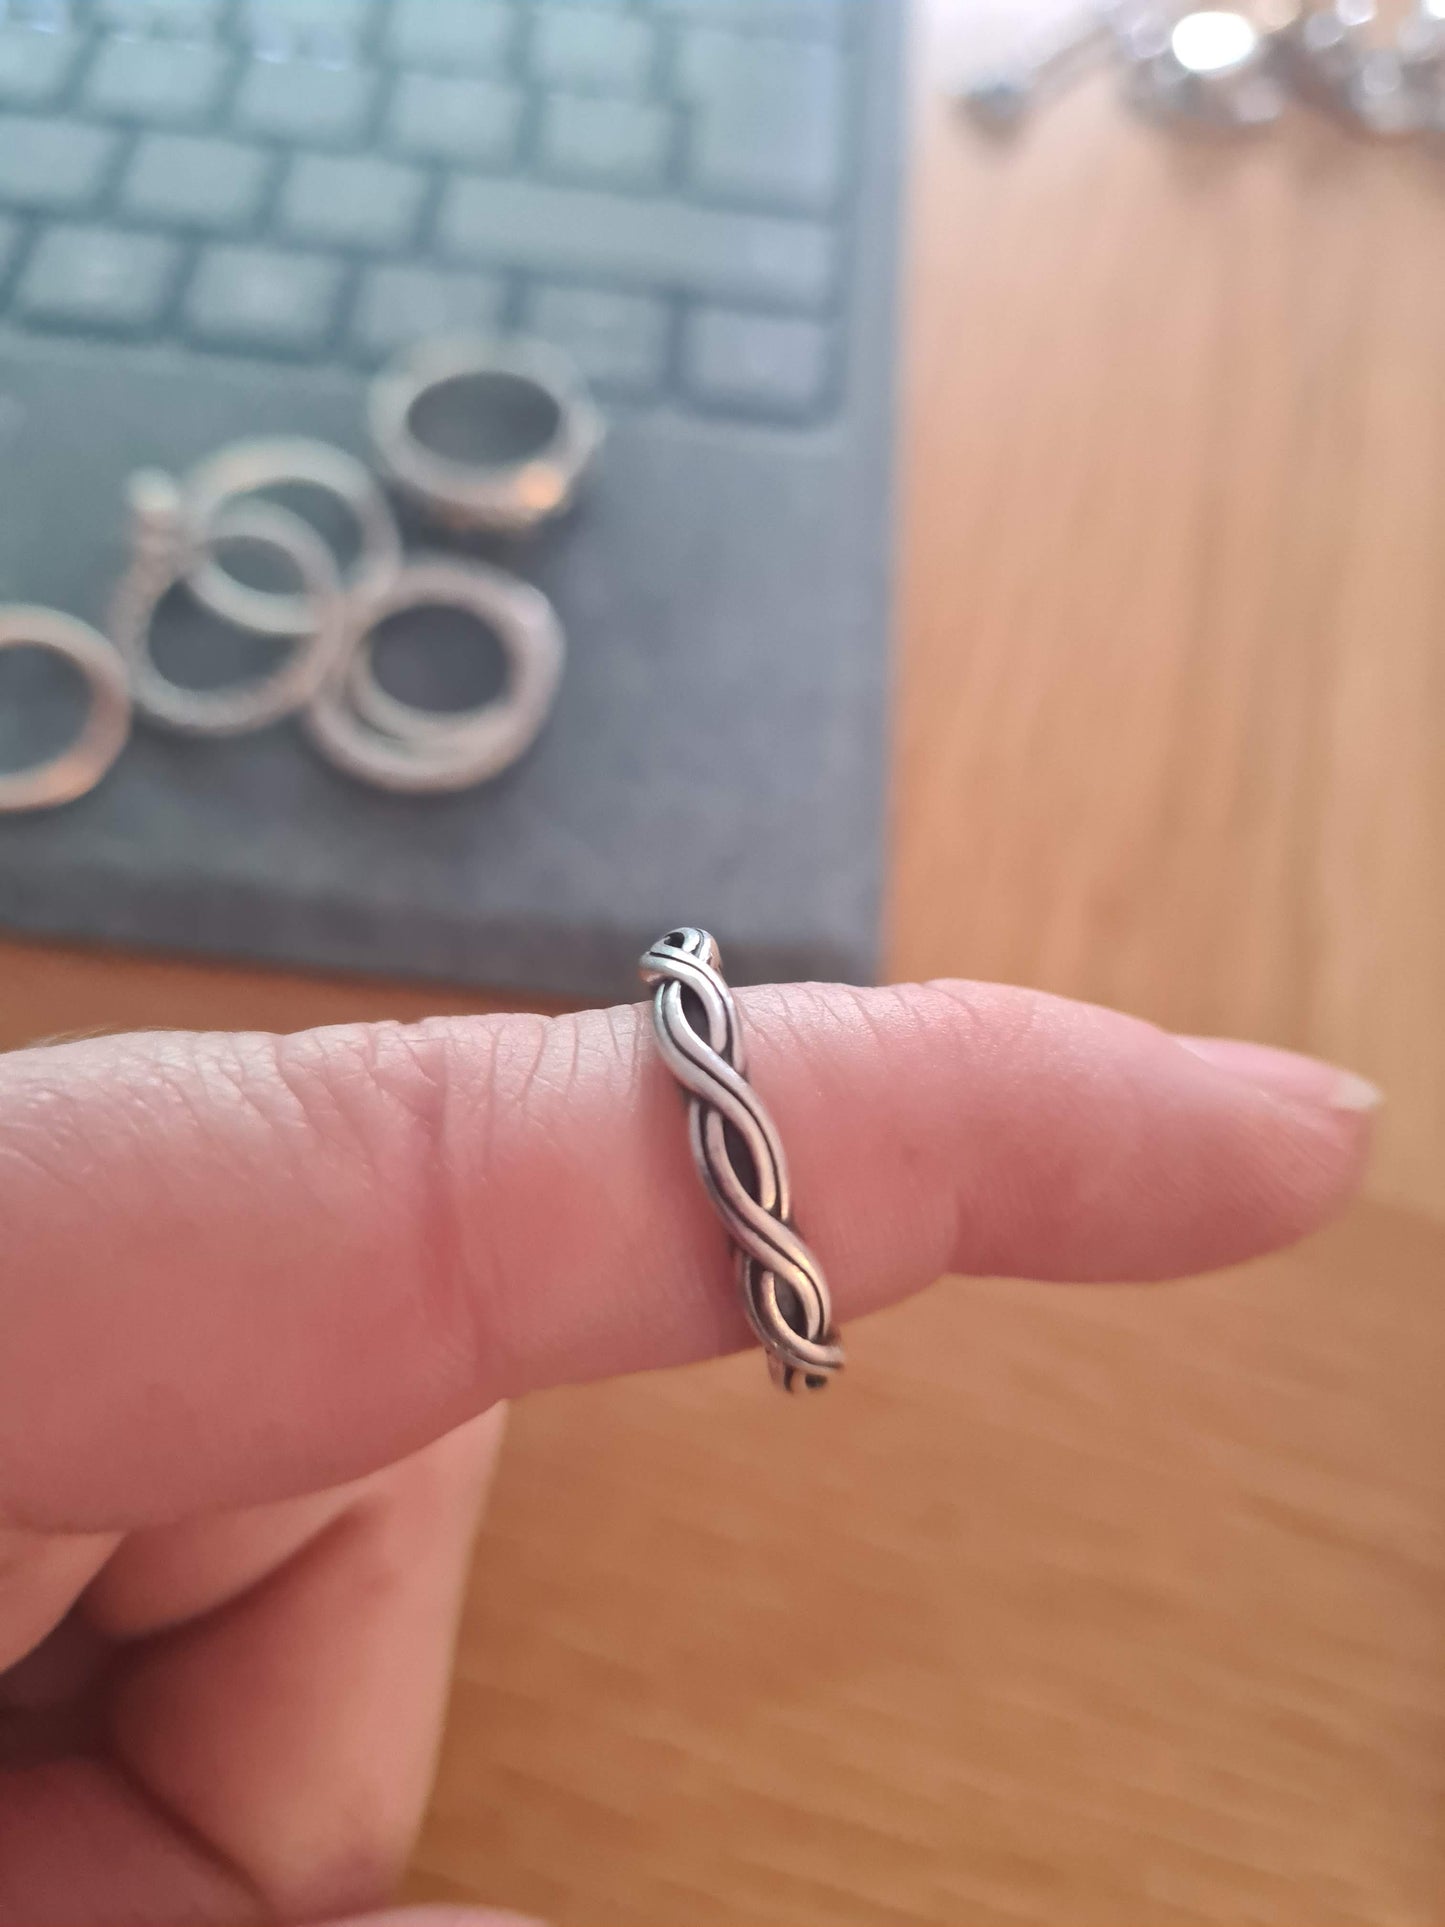 Genuine Pandora Retired Oxidised Twist Line Ring in Size...